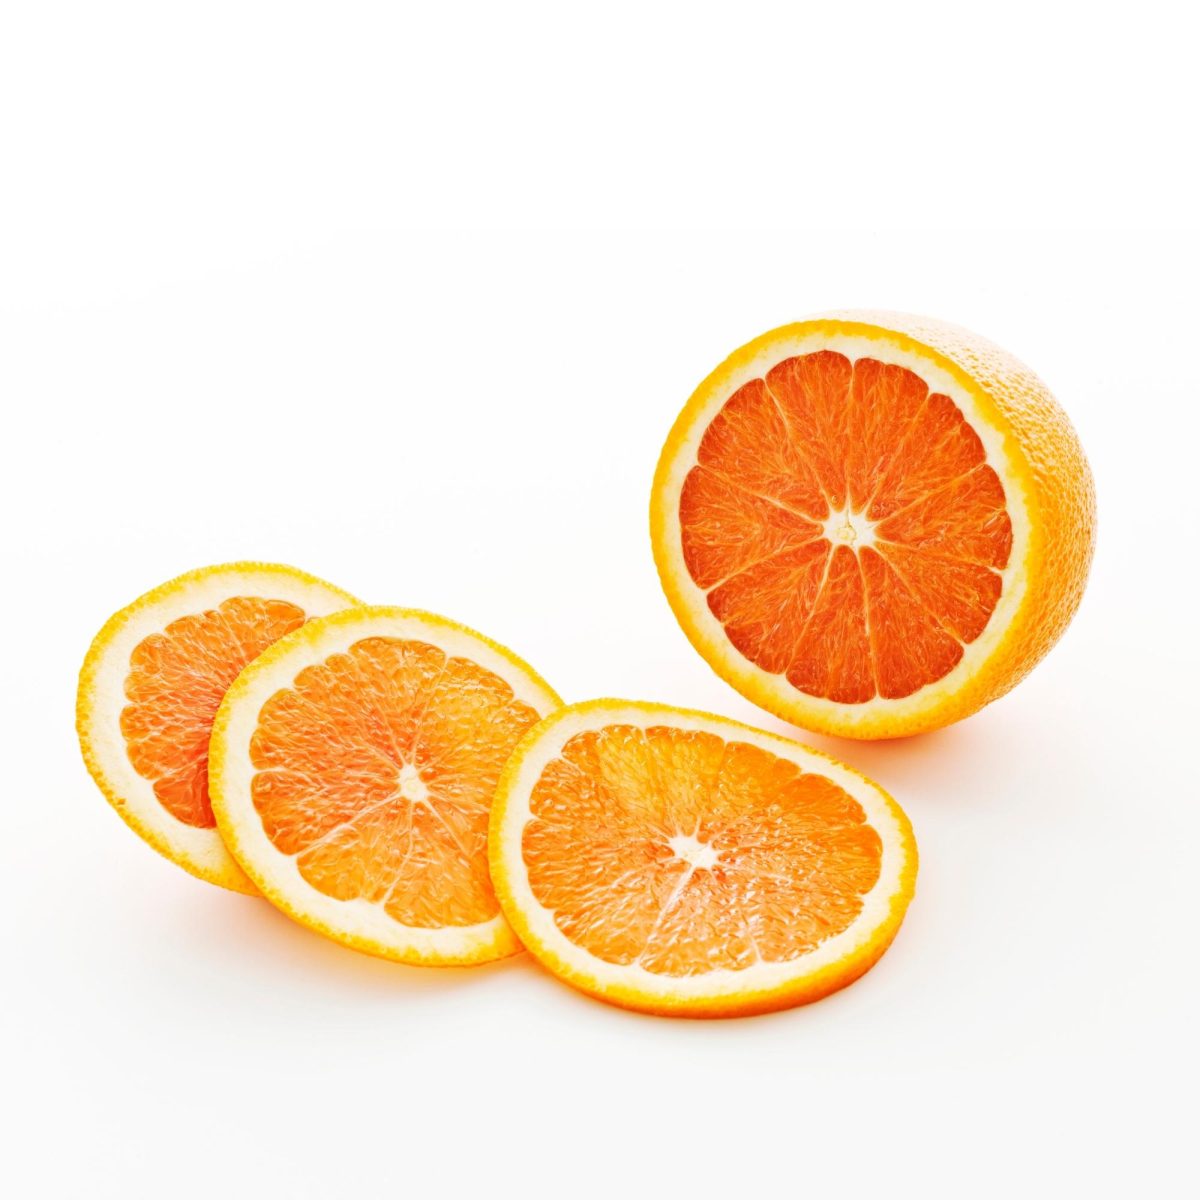 Cara Cara bright orange fruit is seedless and juicy.